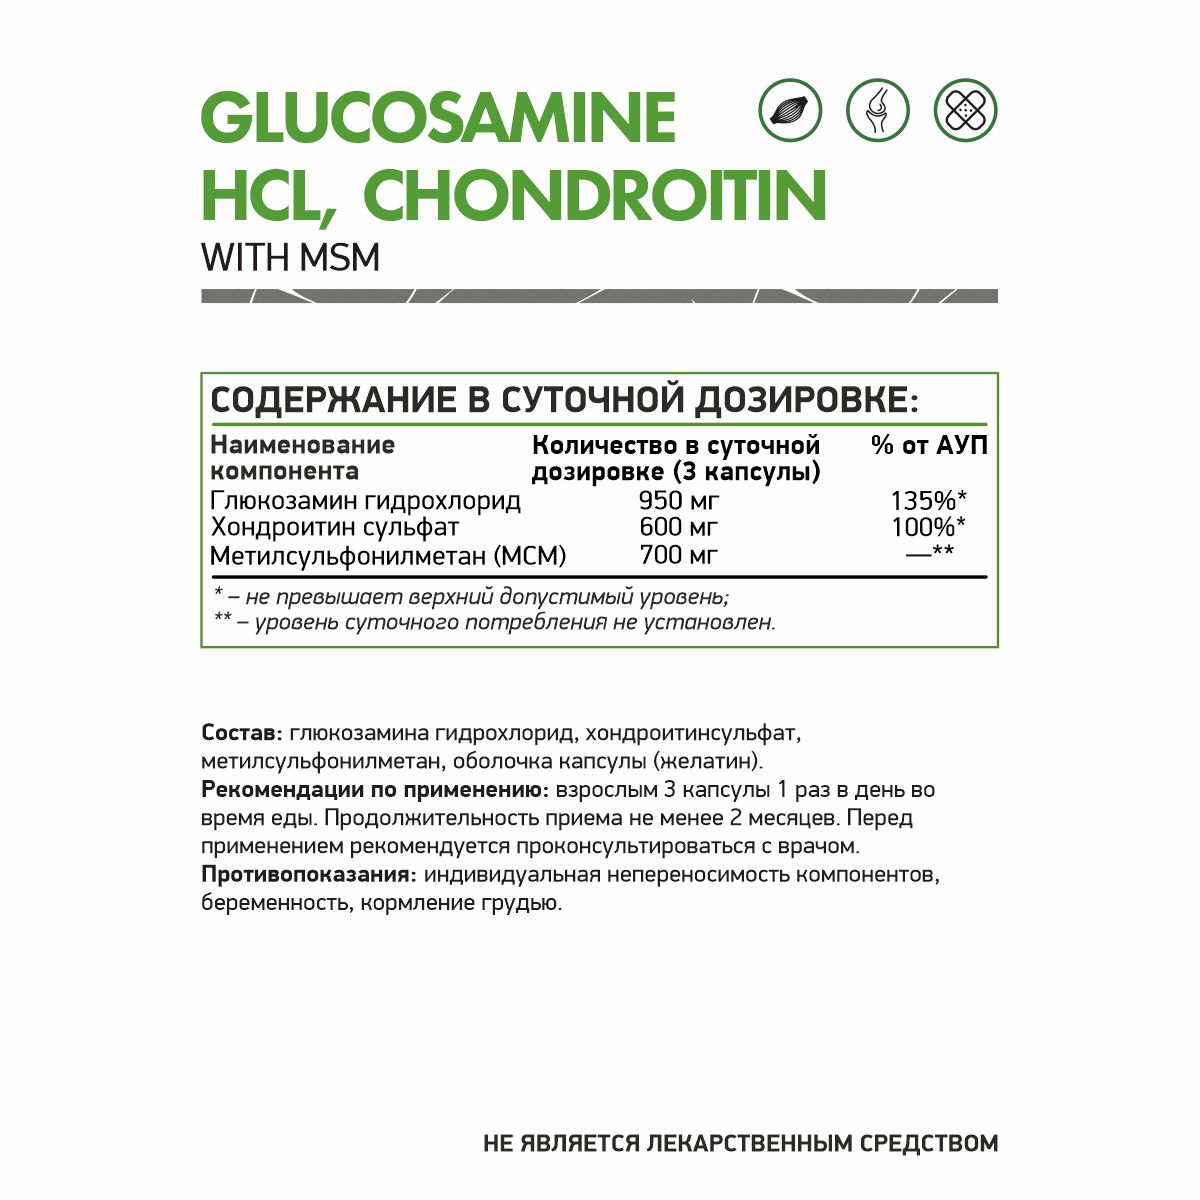 NaturalSupp Глюкозамин Хондроитин МСМ, 120 капсул